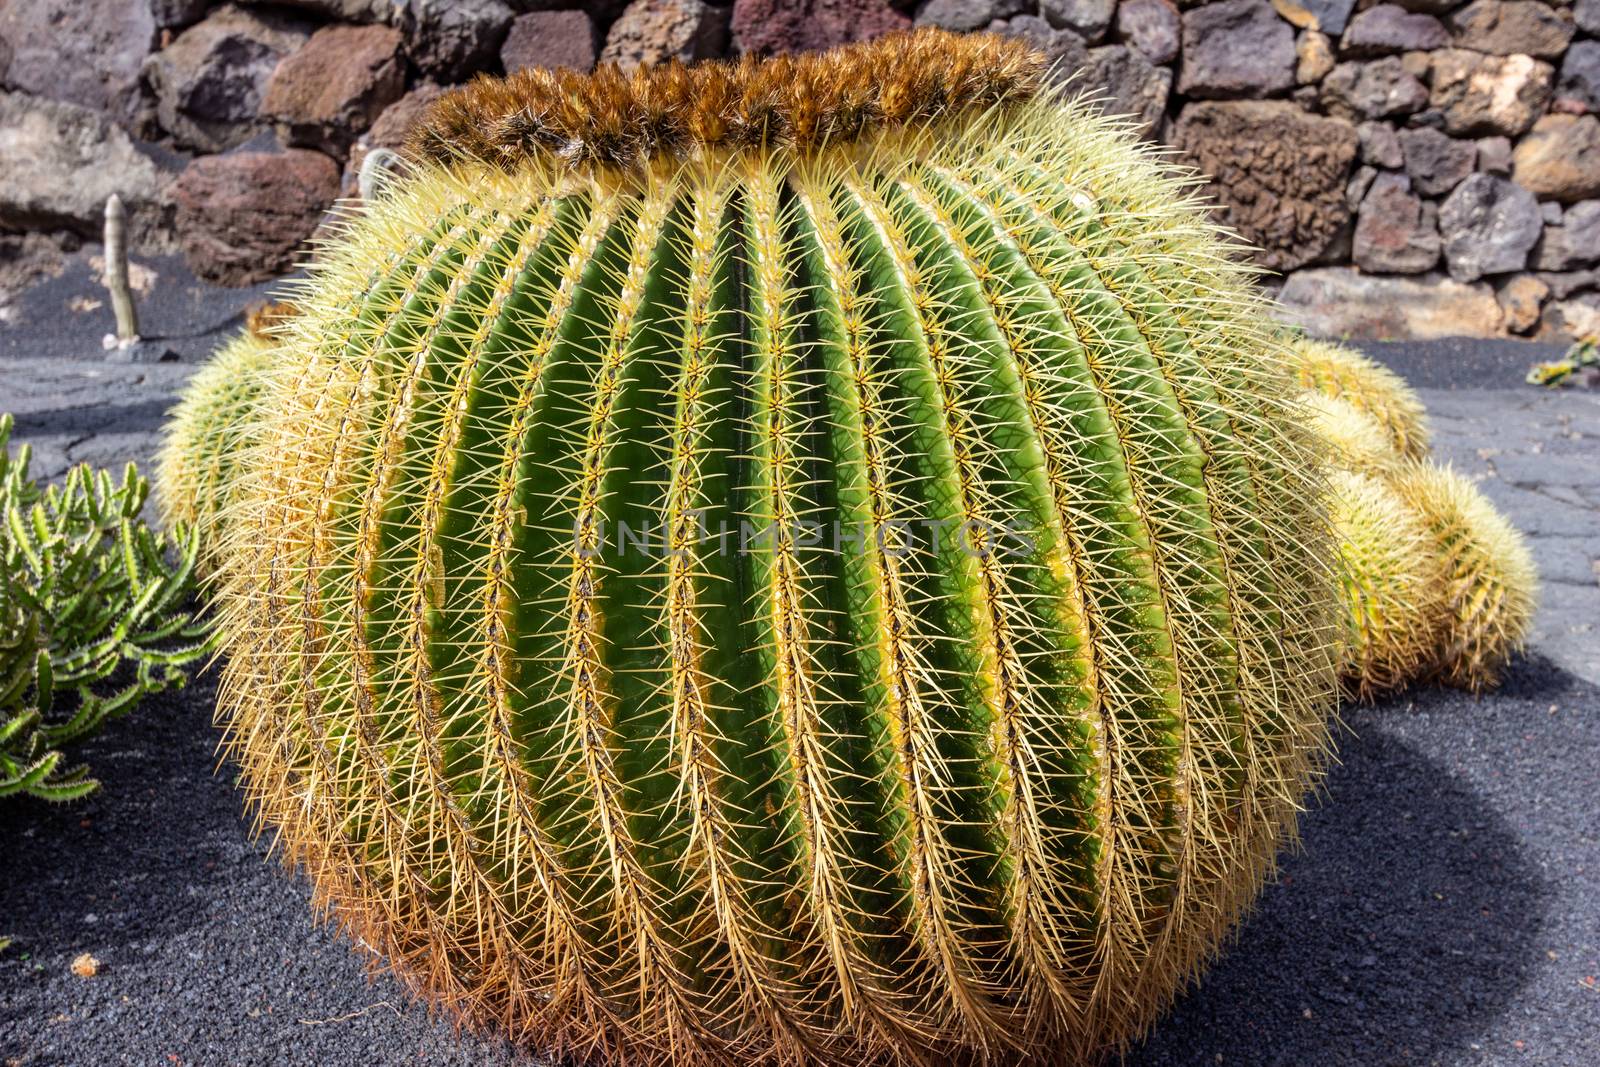 Golden barrel cactus  in Jardin de Cactus by Cesar Manrique on c by reinerc